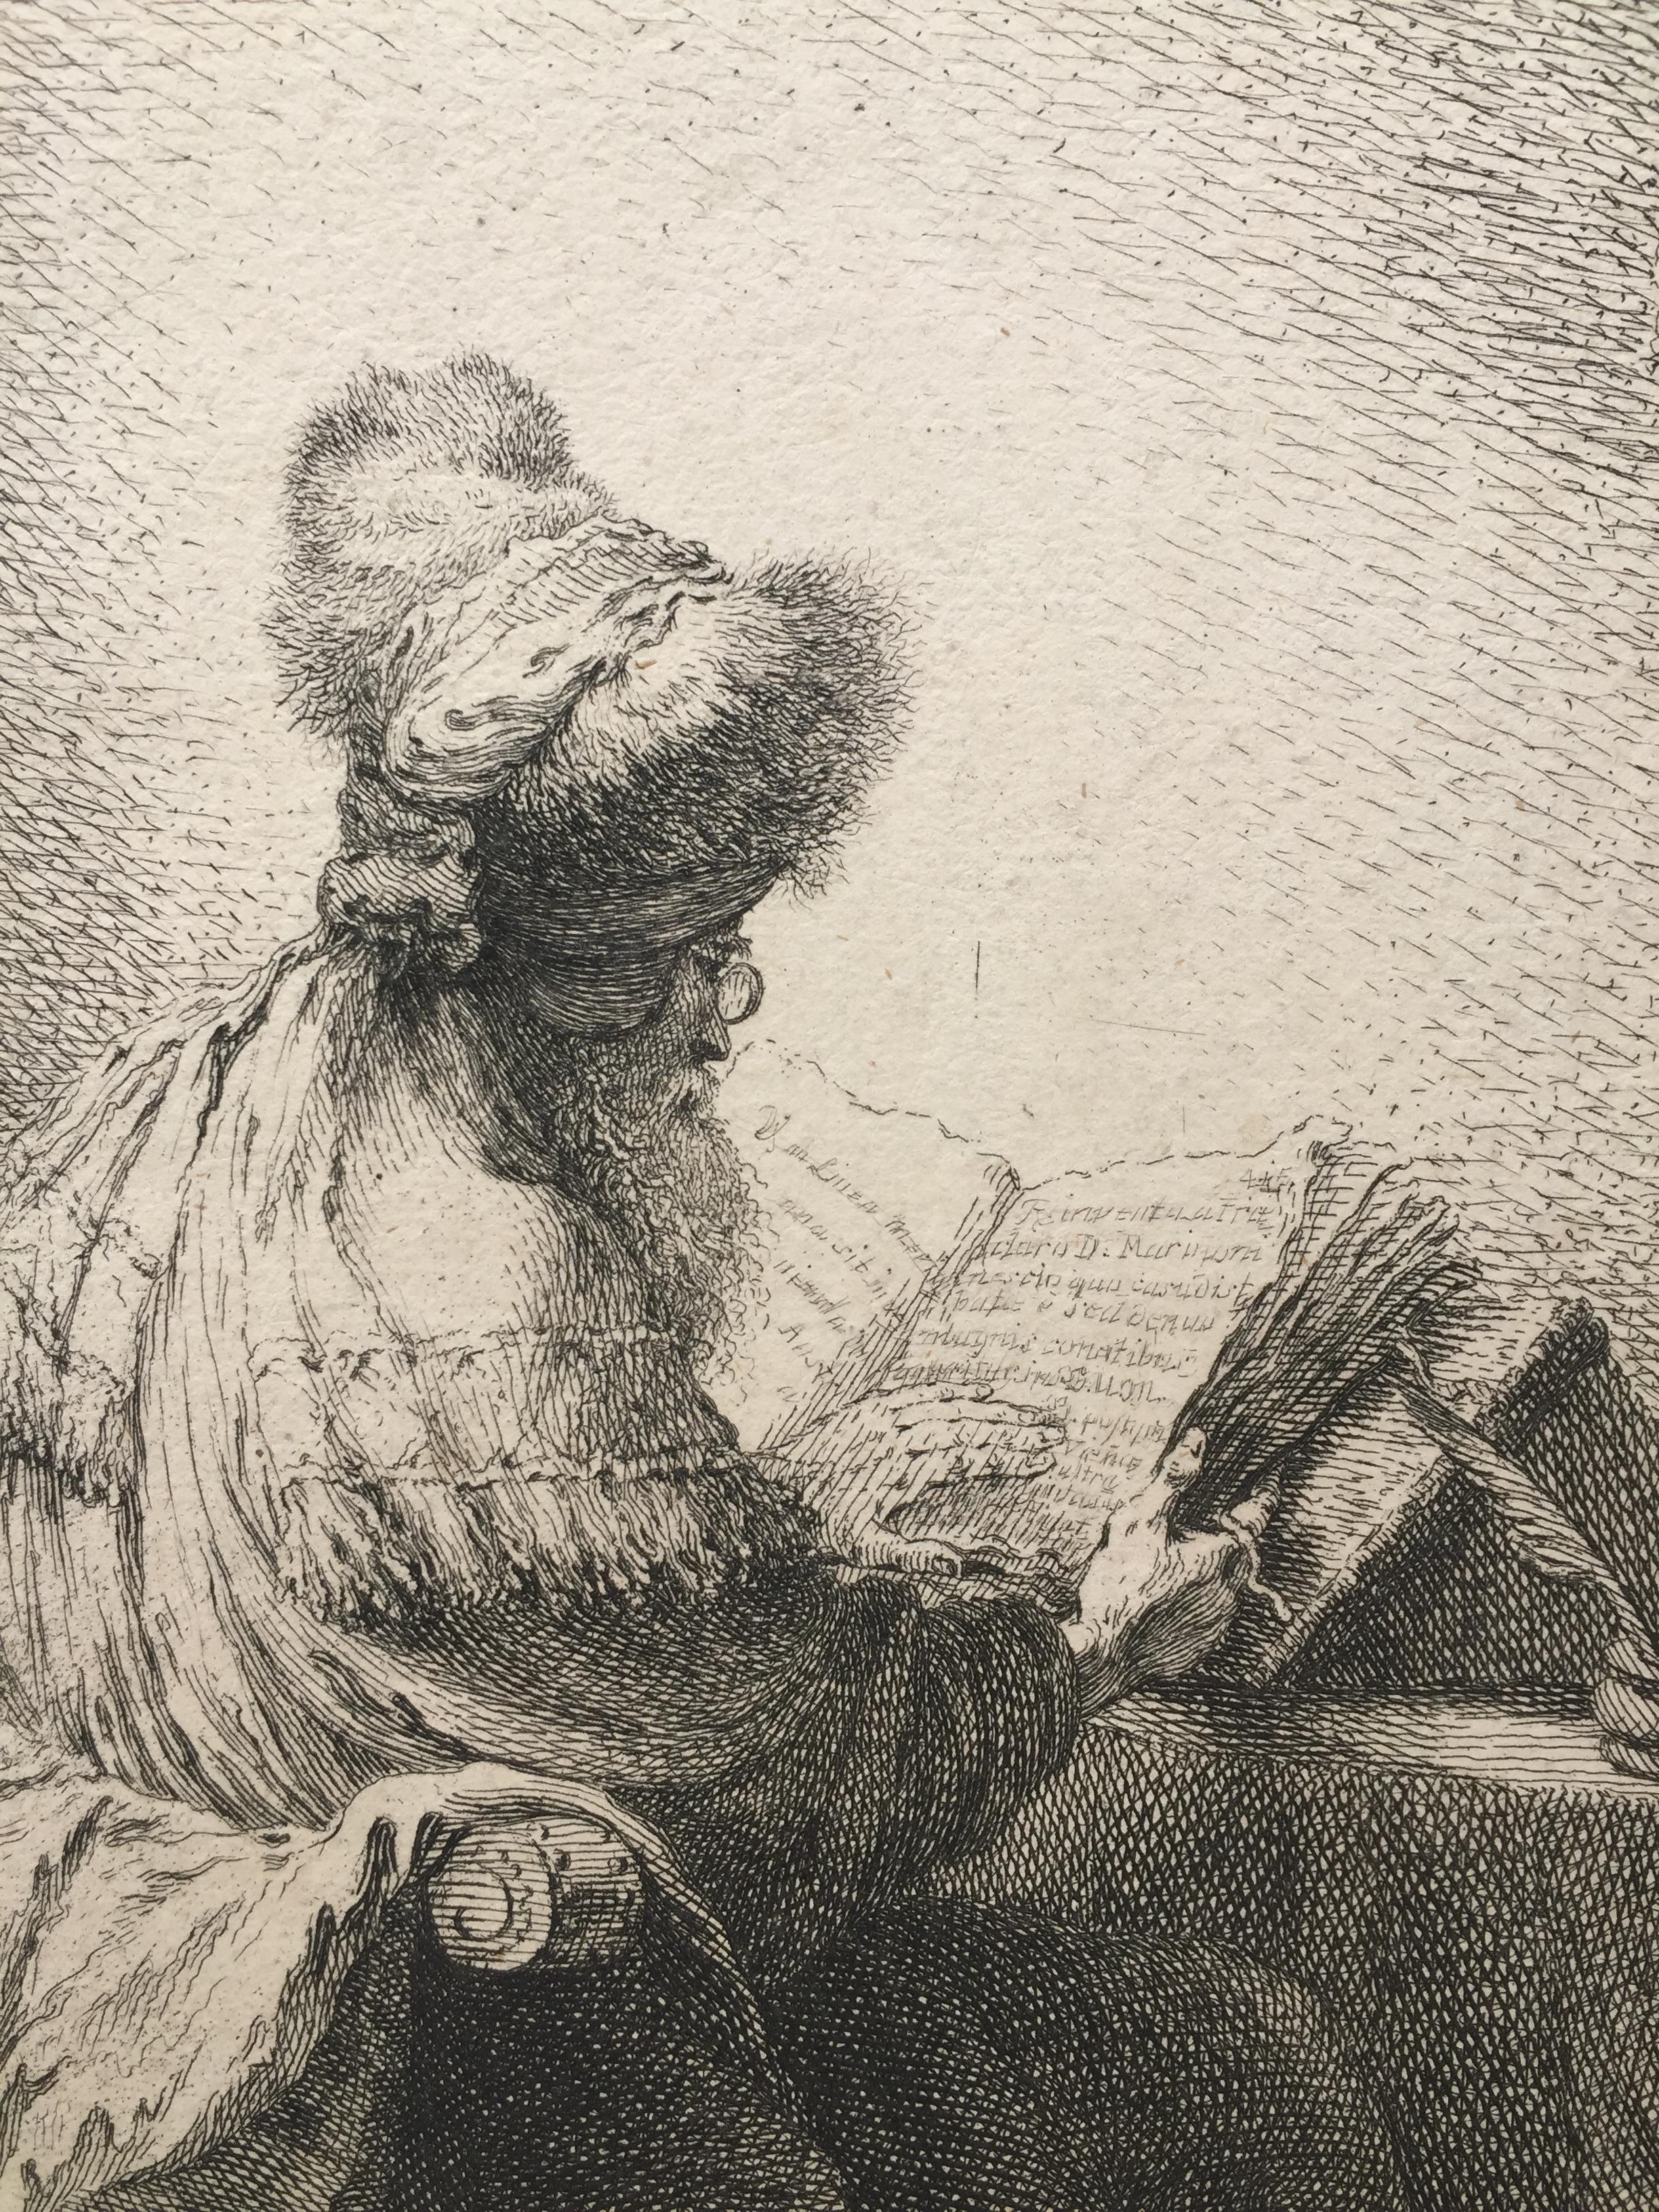 rembrandt philosopher reading